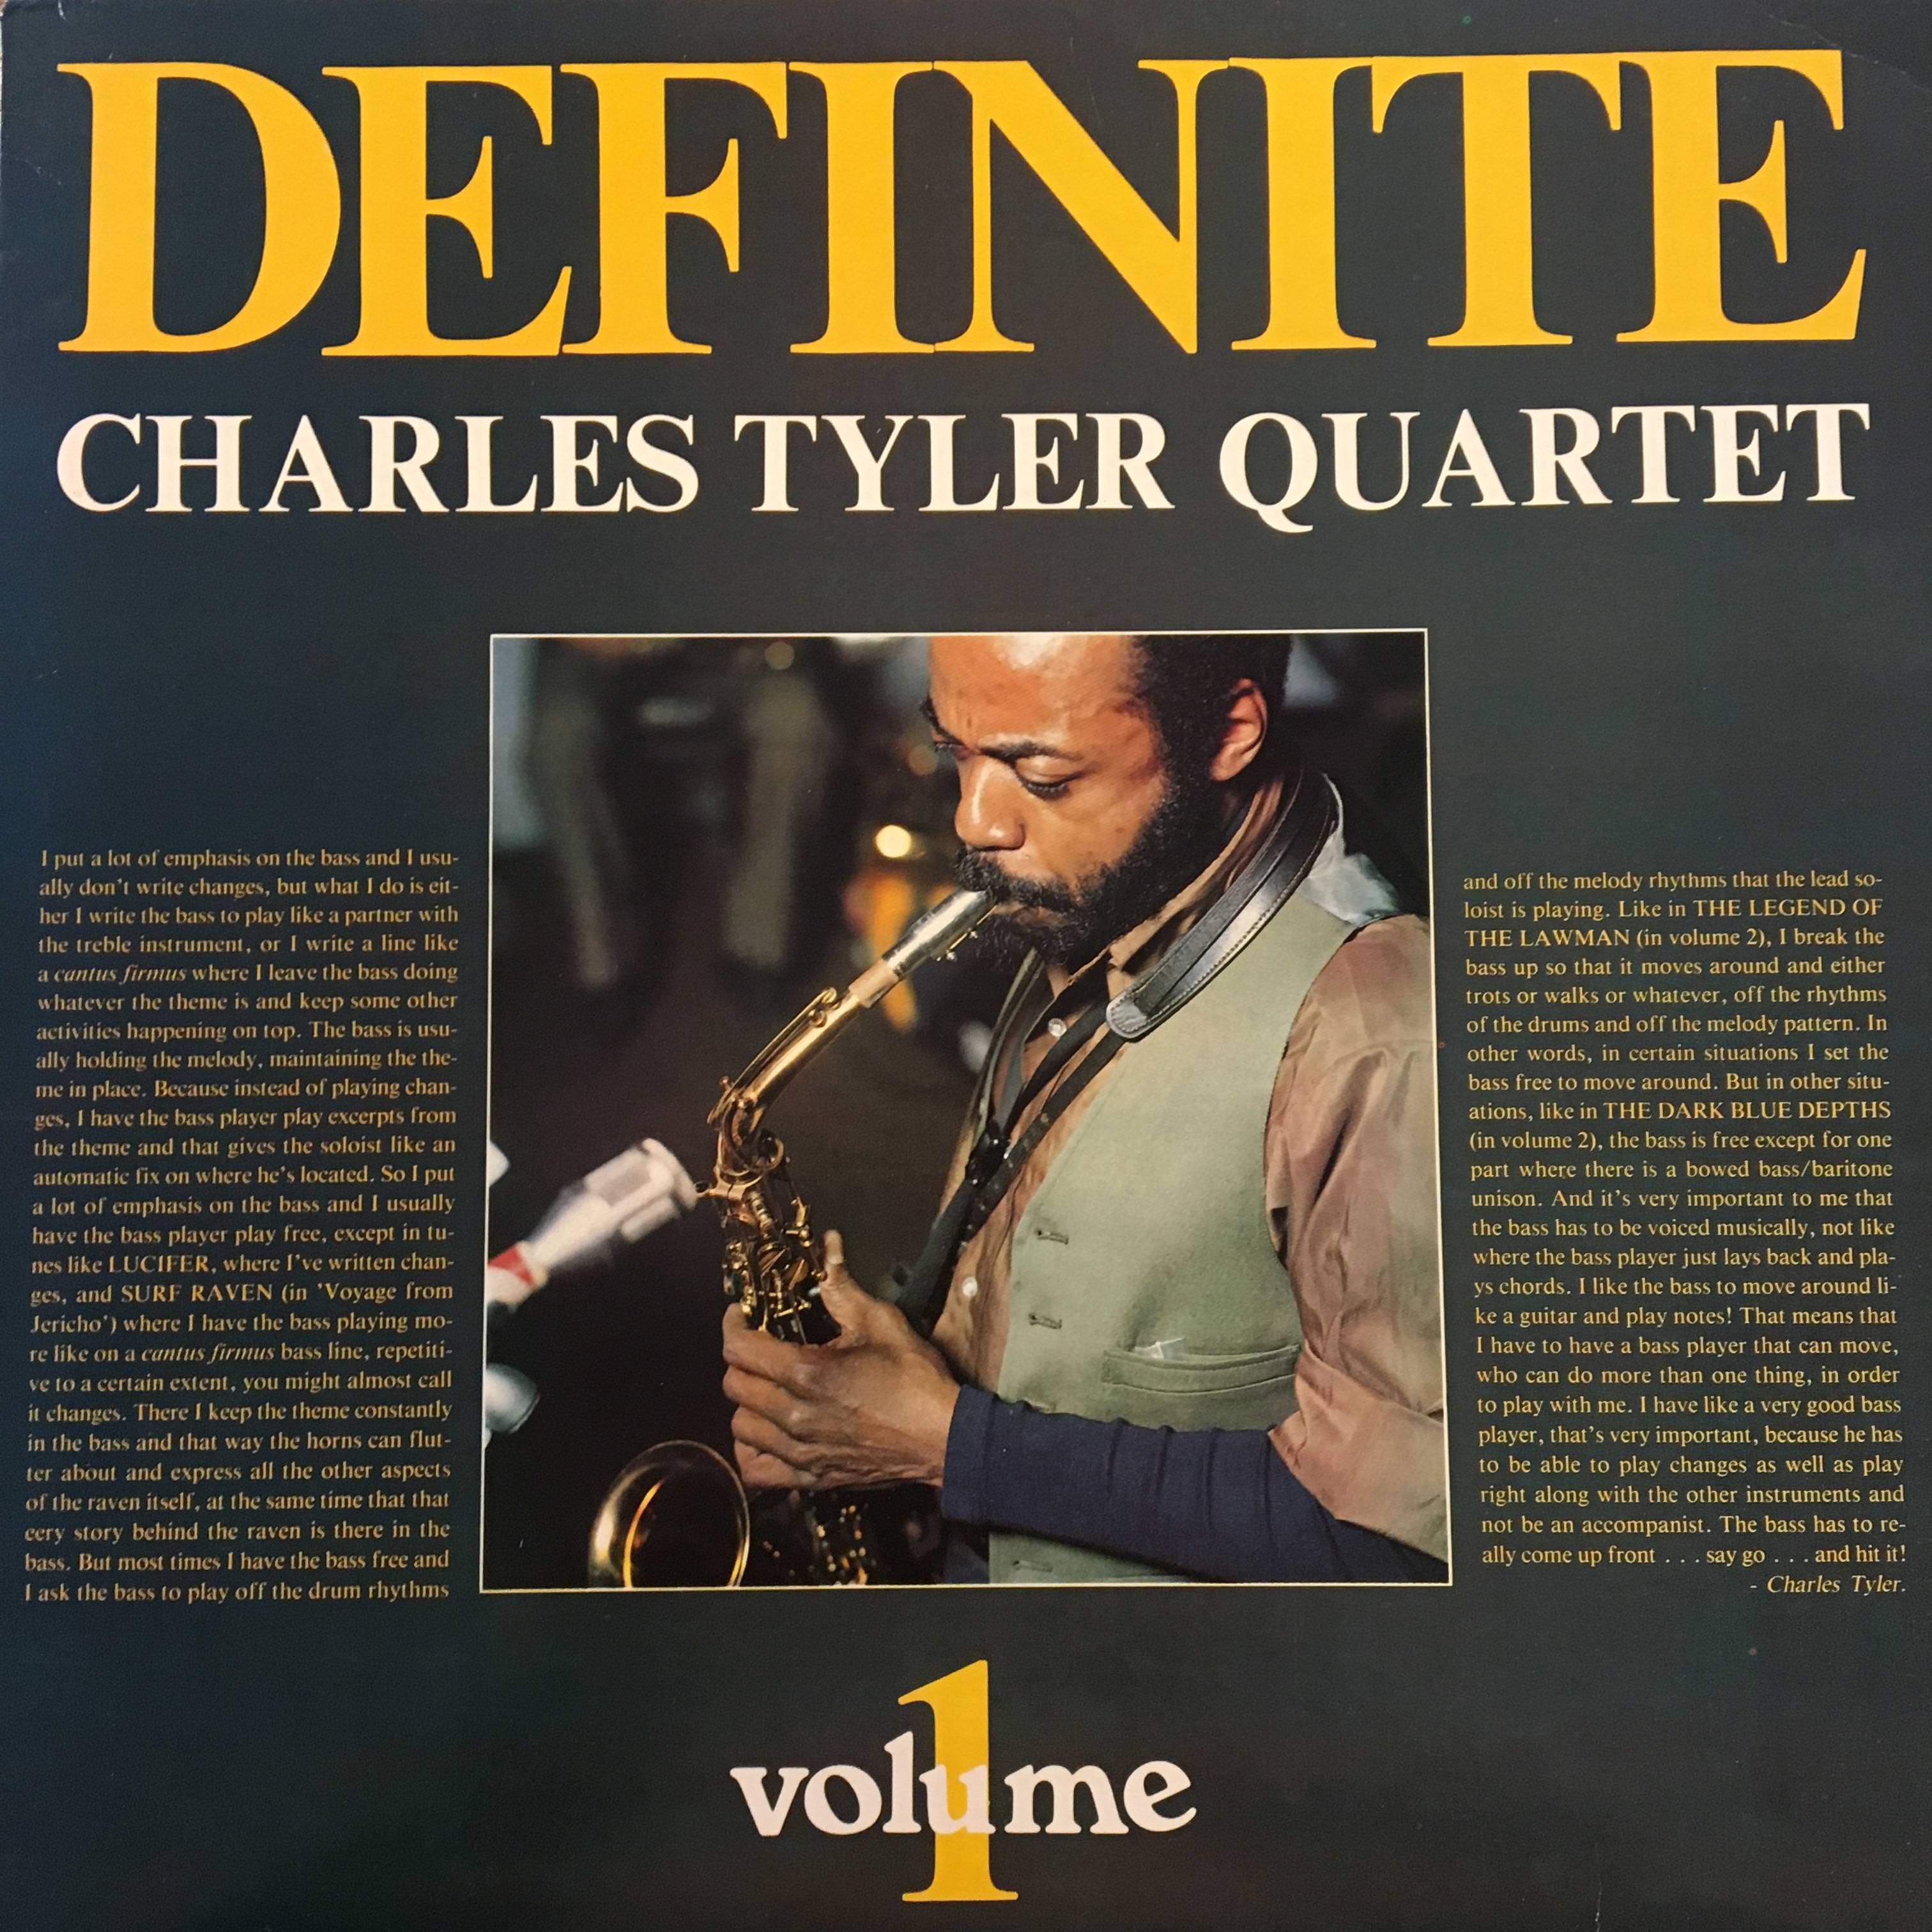 Charles Tyler Quartet - Definite Vol. 1 (1982/2017) [HDTracks FLAC 24bit/96kHz]